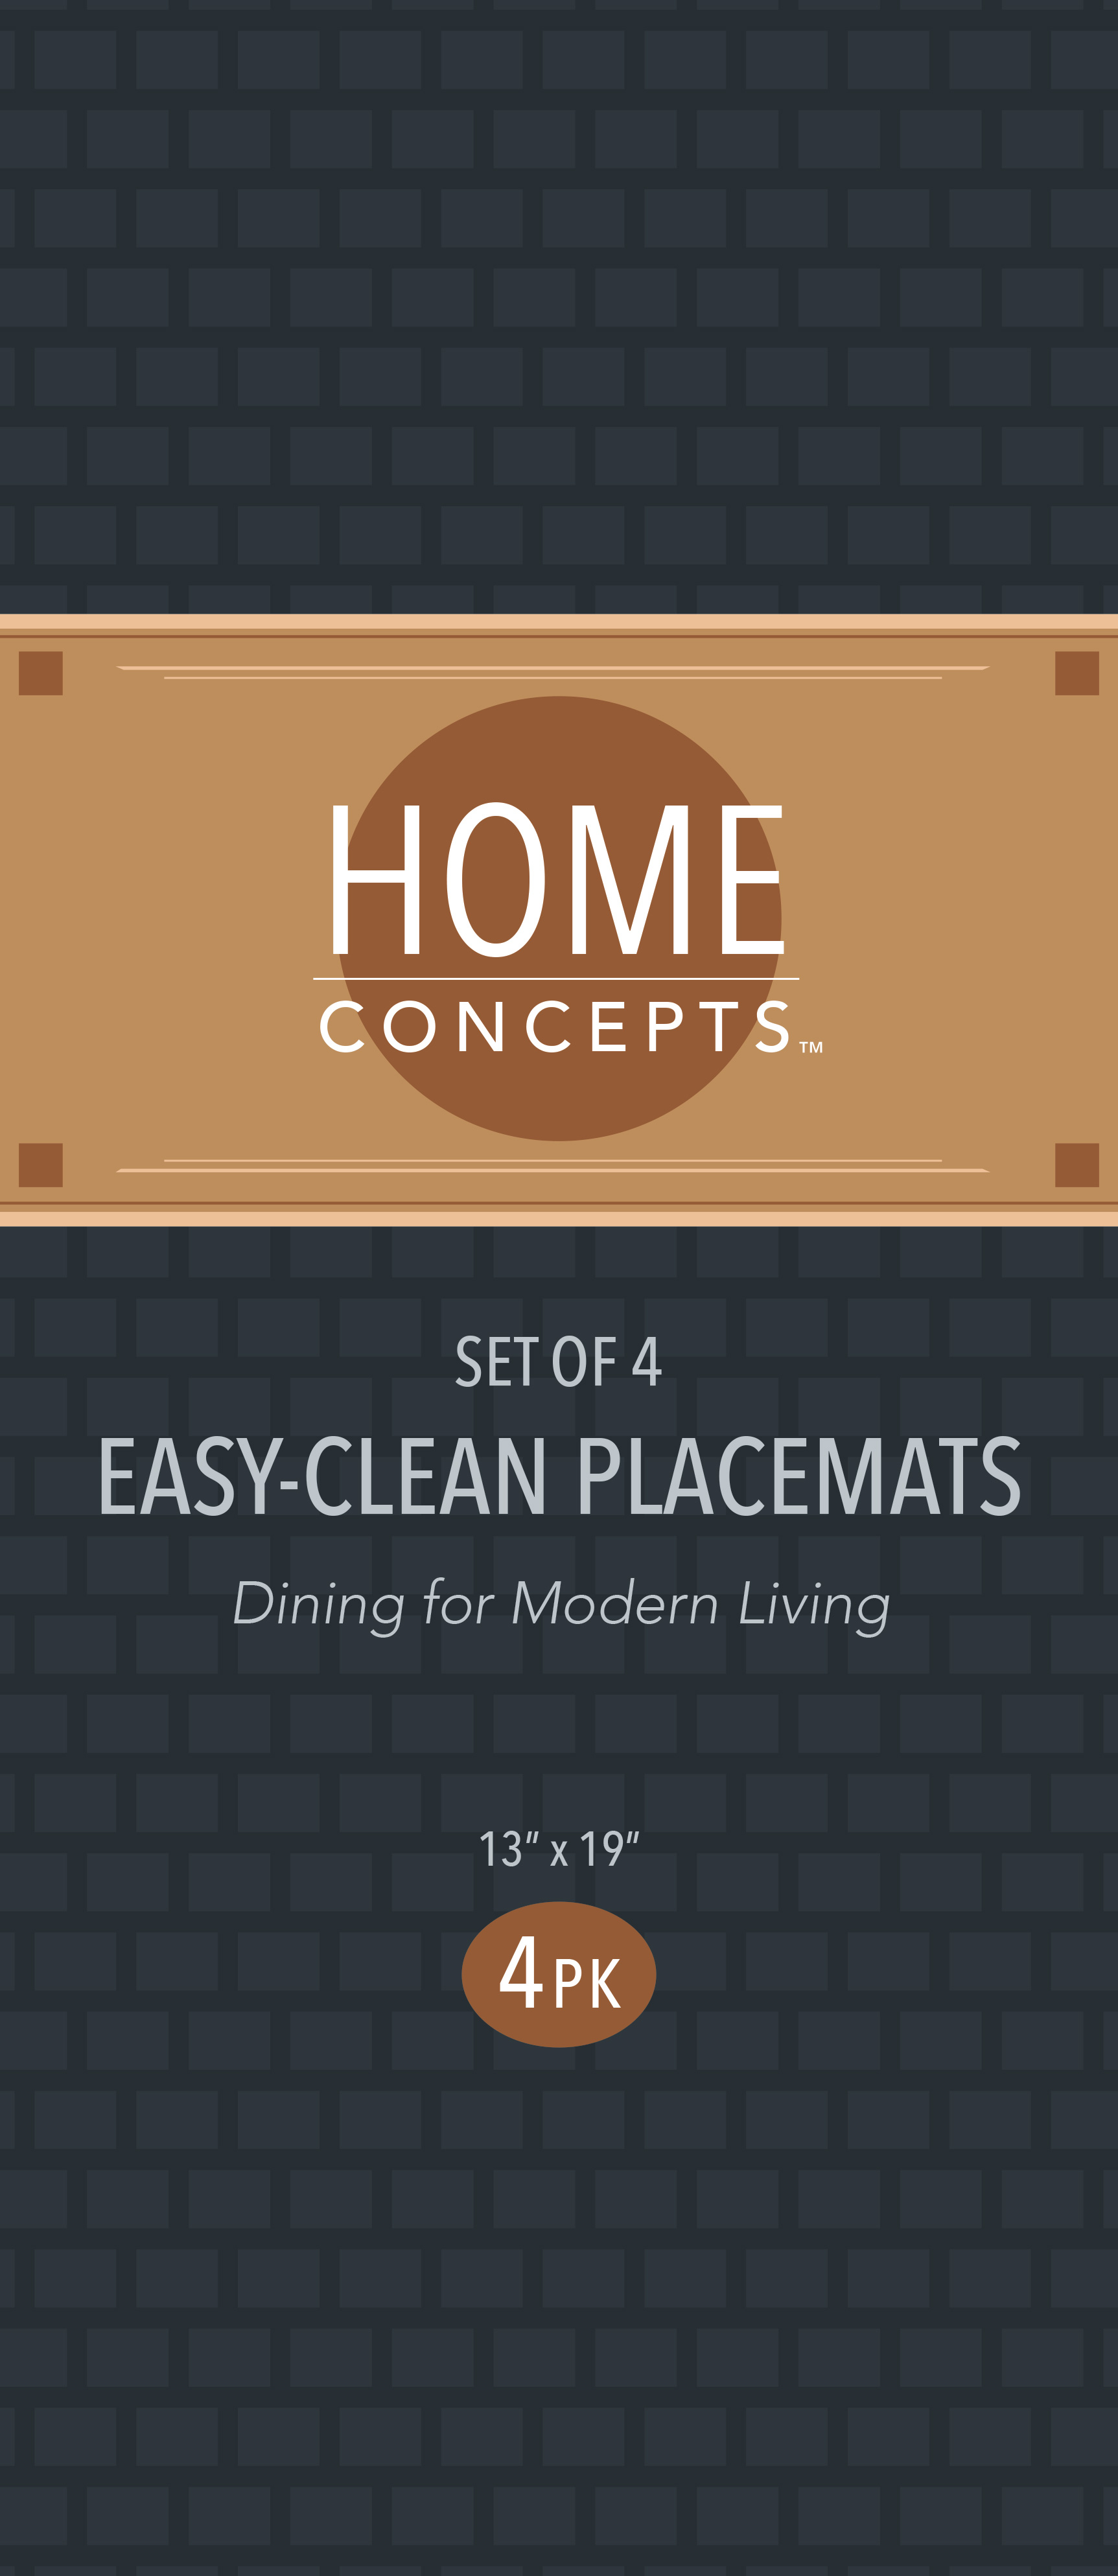 Home Concepts Placemats